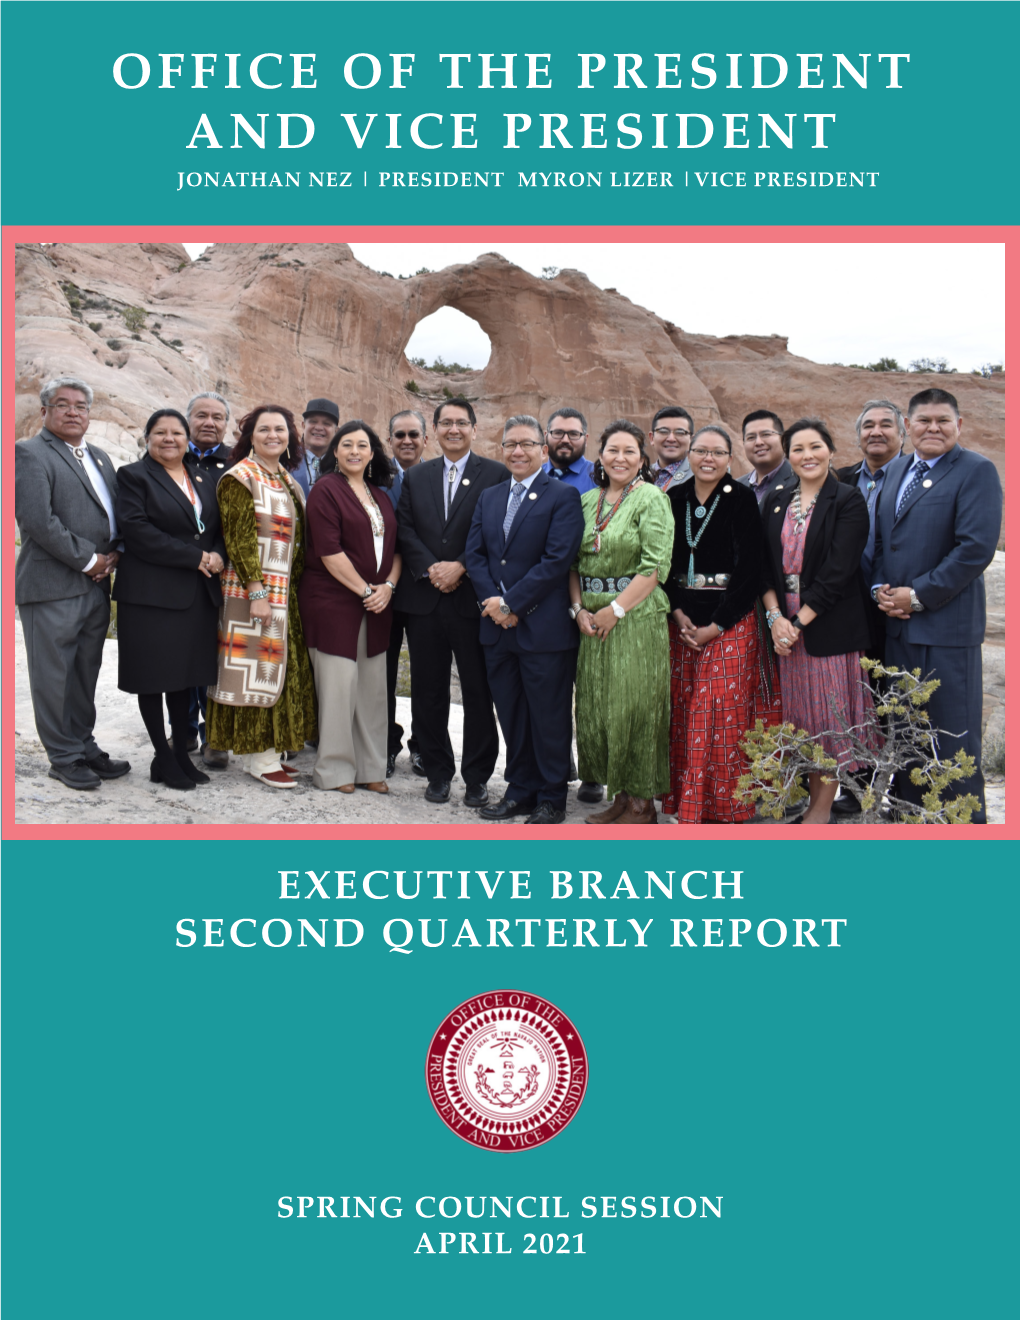 Executive Branch Second Quarterly Report 2021